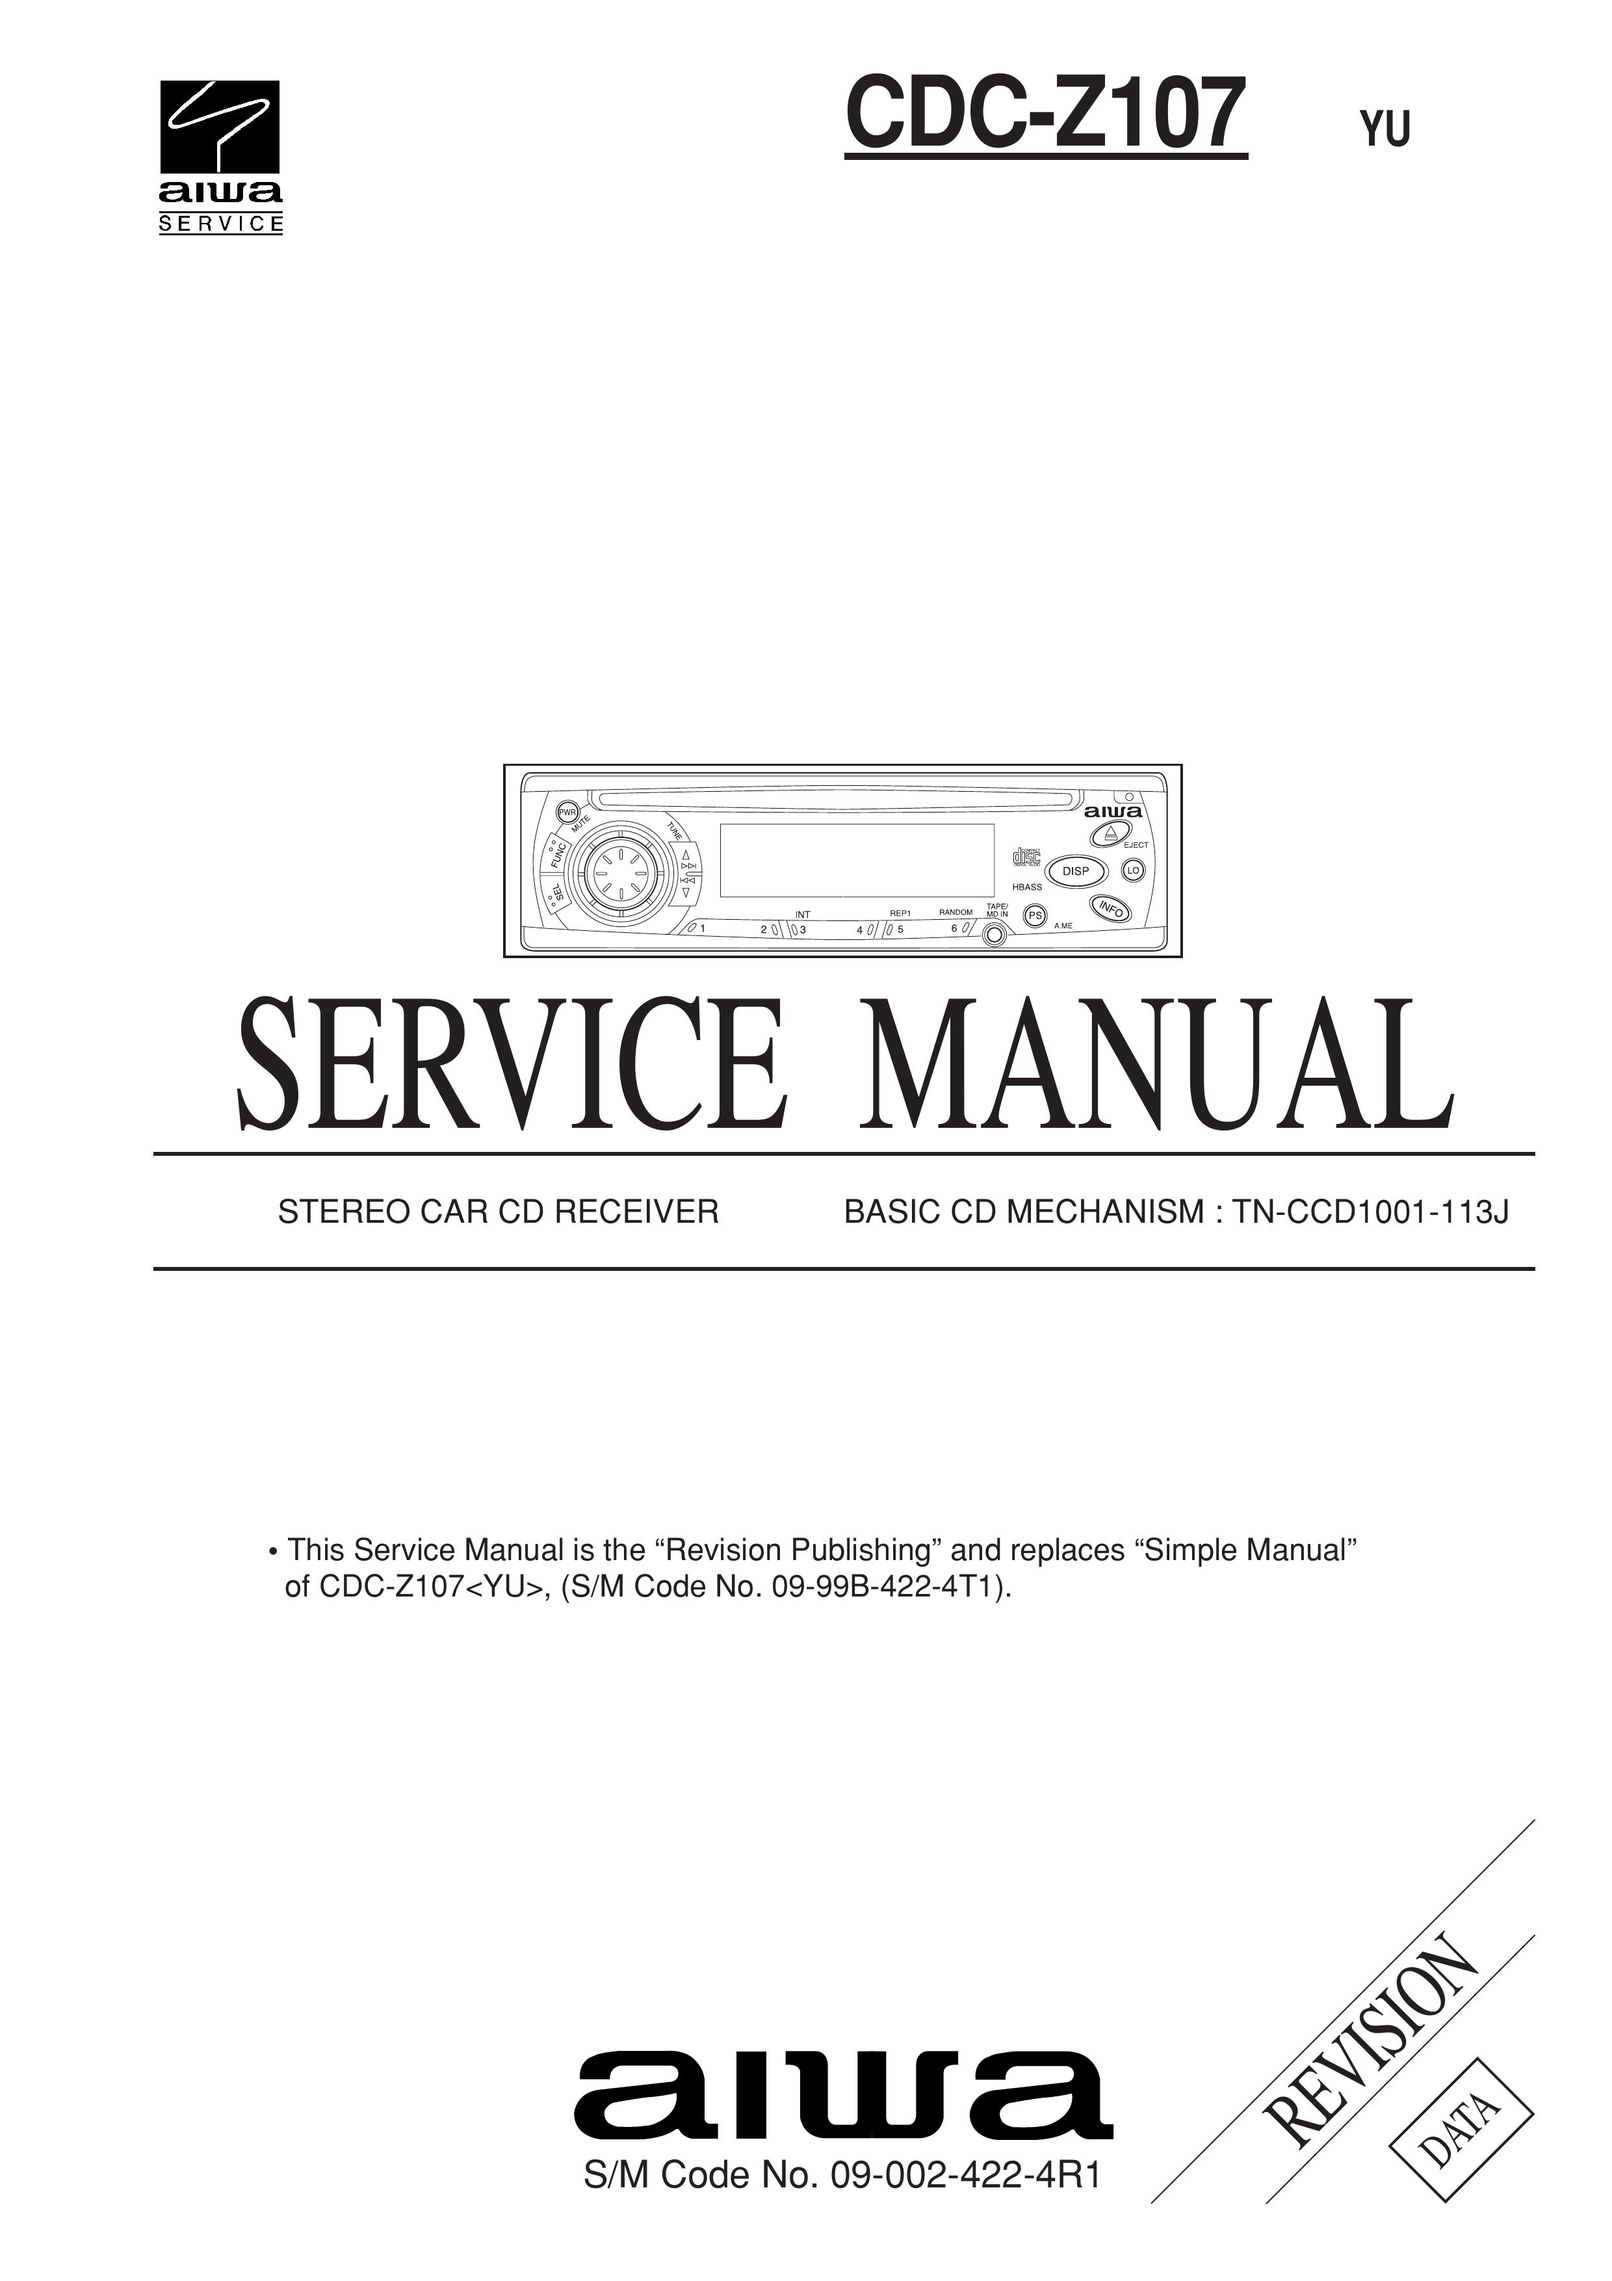 Aiwa CDC-Z107 Car Stereo System User Manual (Page 1)